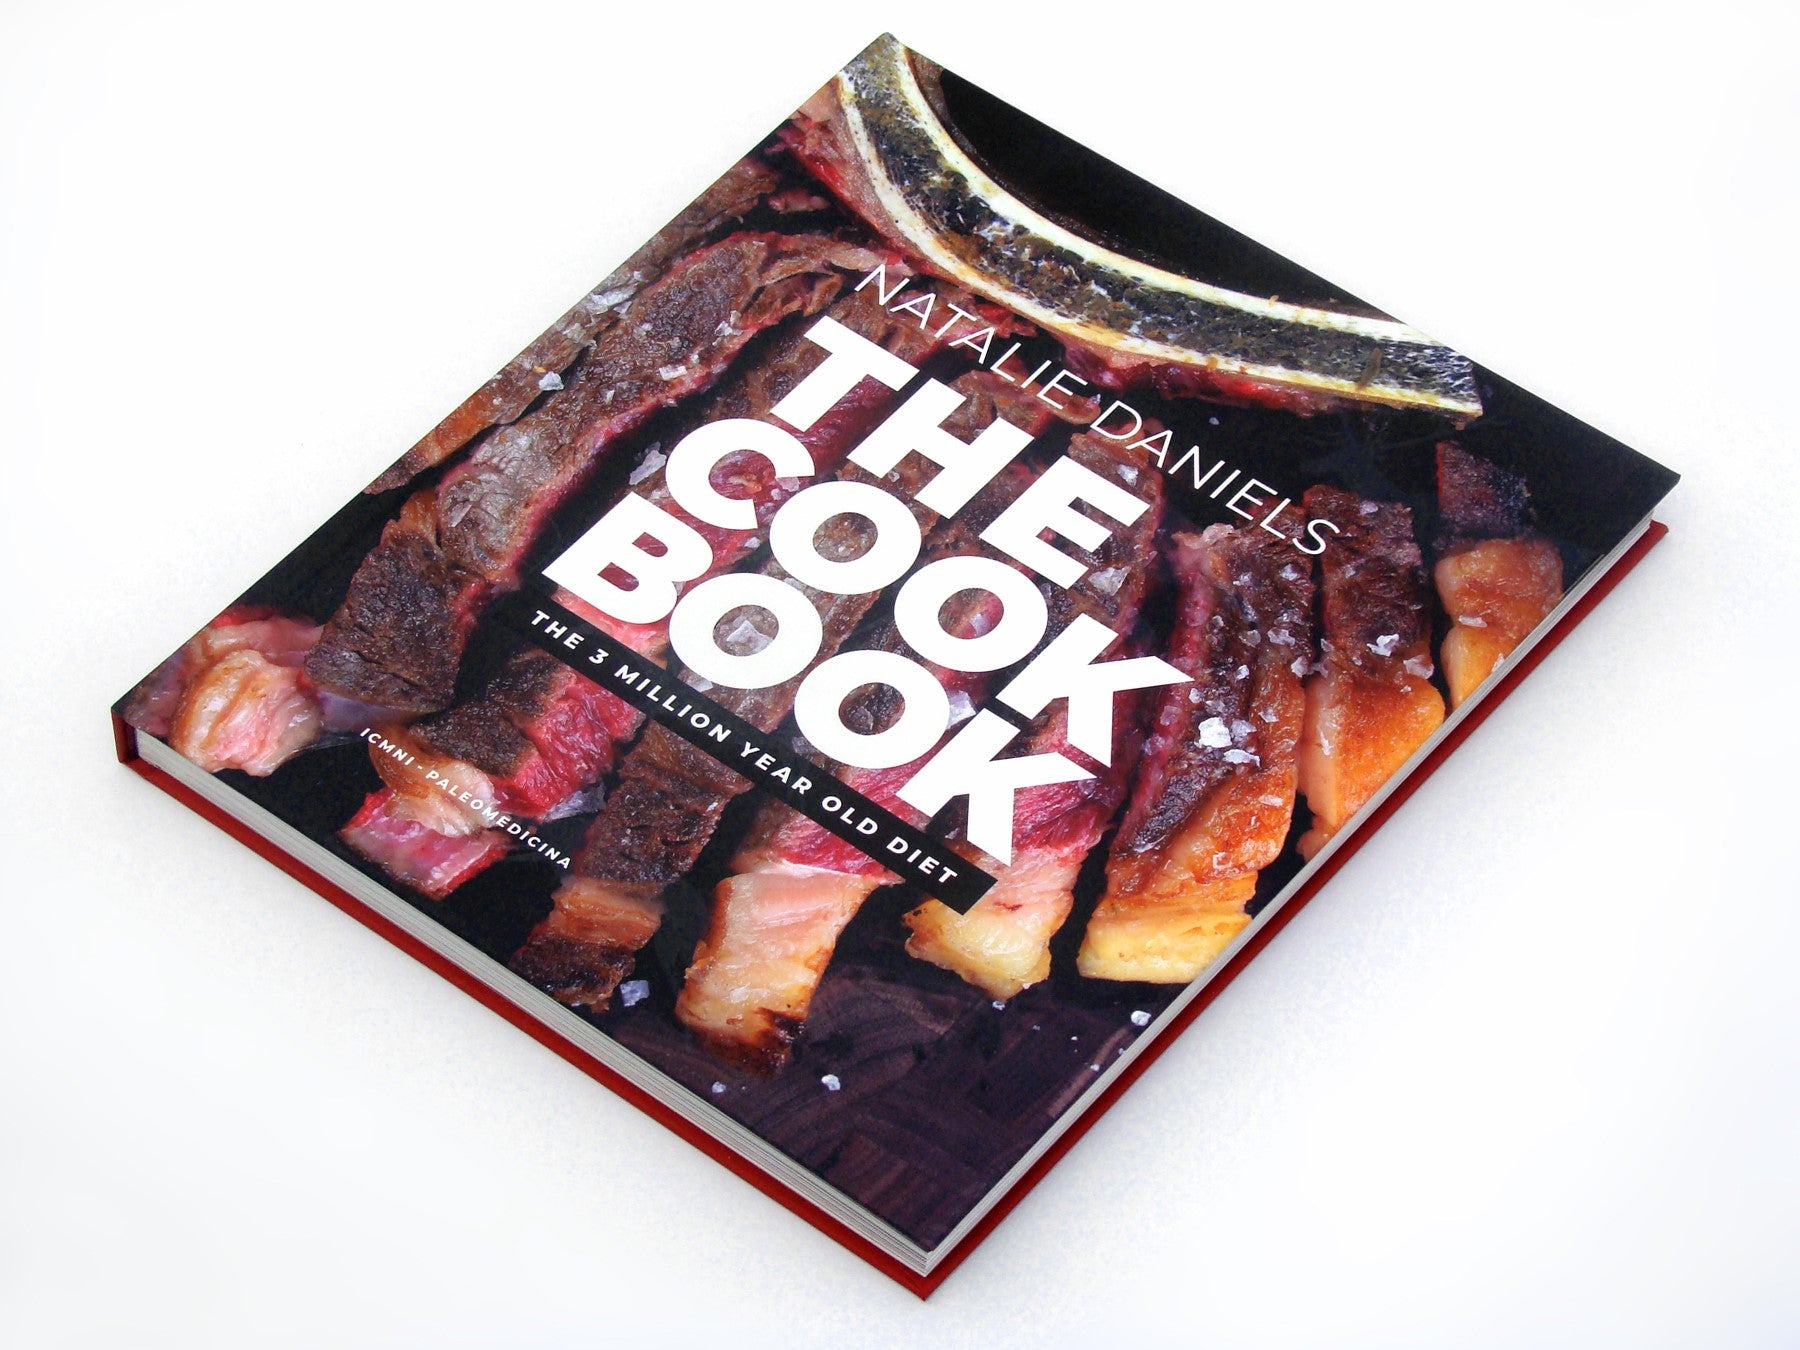 The Cookbook - The Three Million Year Old Diet - Natalie Daniels